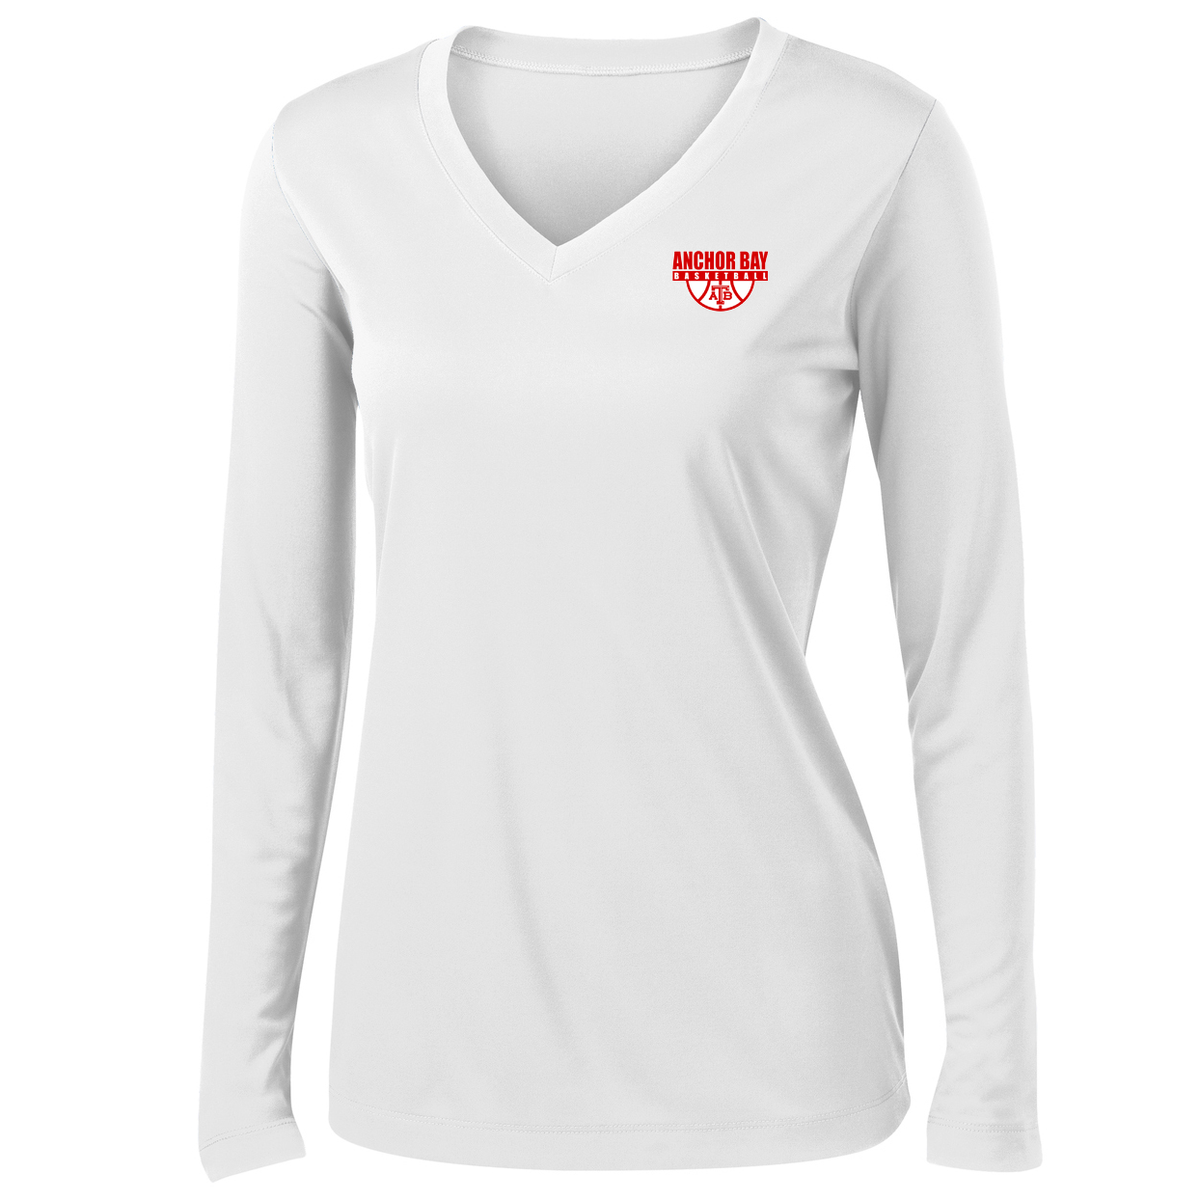 Anchor Bay Basketball Women's Long Sleeve Performance Shirt